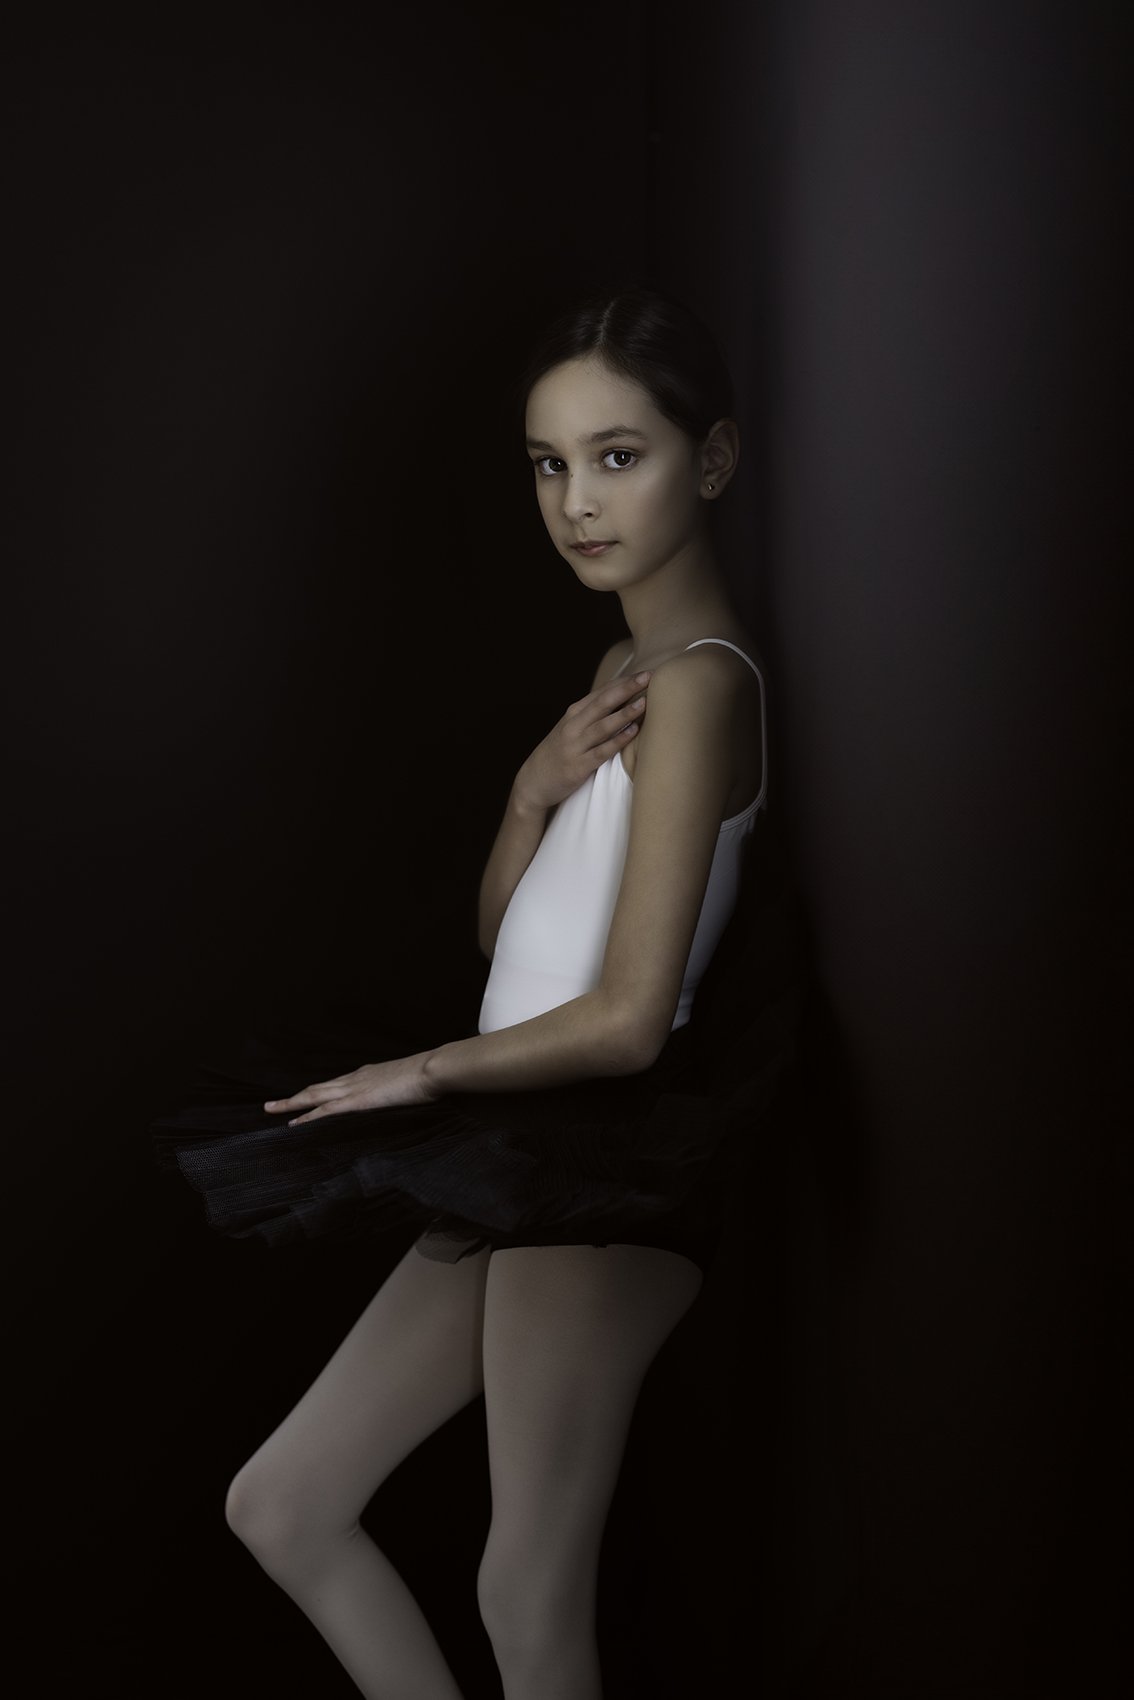  Child ballet dancer in black tutu fine art ballet portrait by award winning dance and boudoir photographer Shannon Beauclair of Beauclair Photography. 